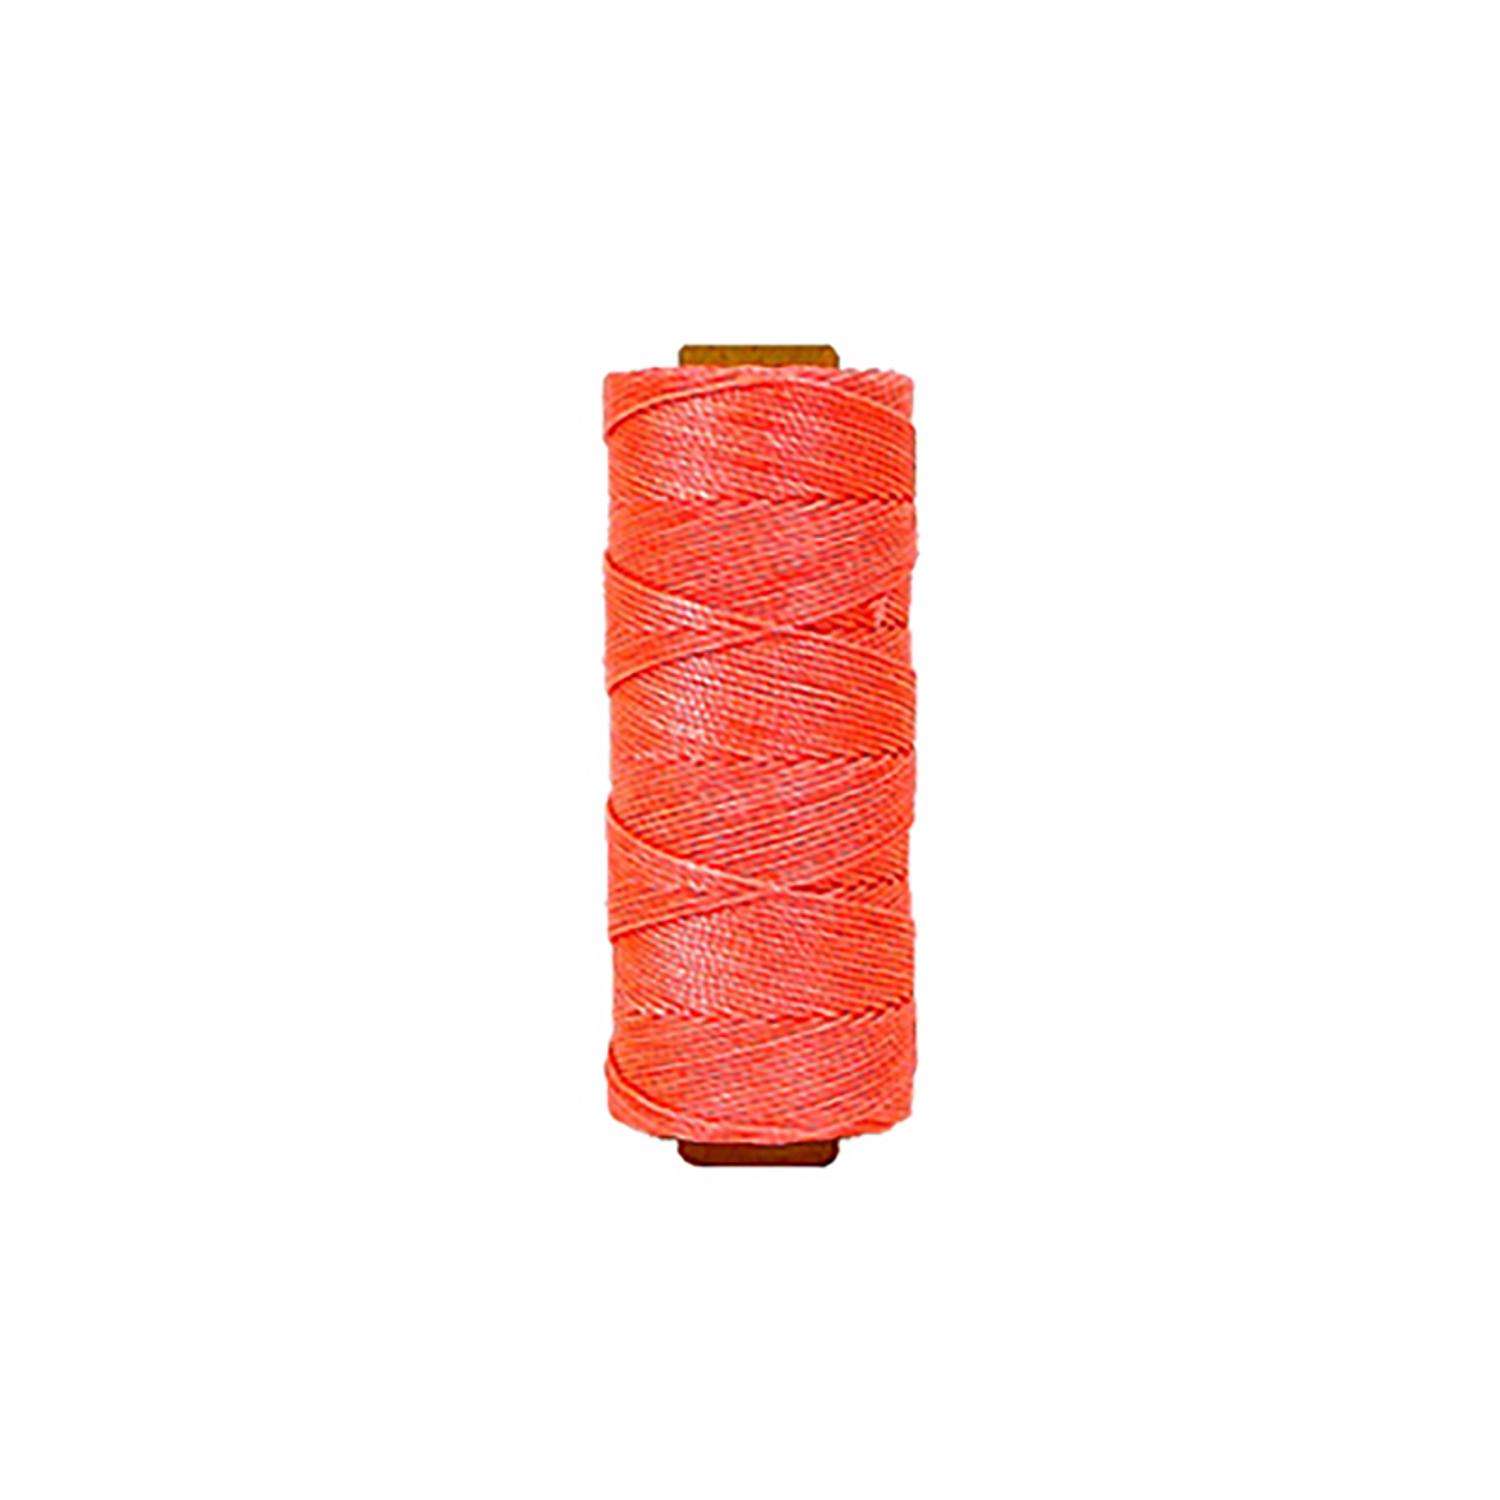 #18 x 260' Opti Orange Nylon Seine Twine, Wellington, 46301